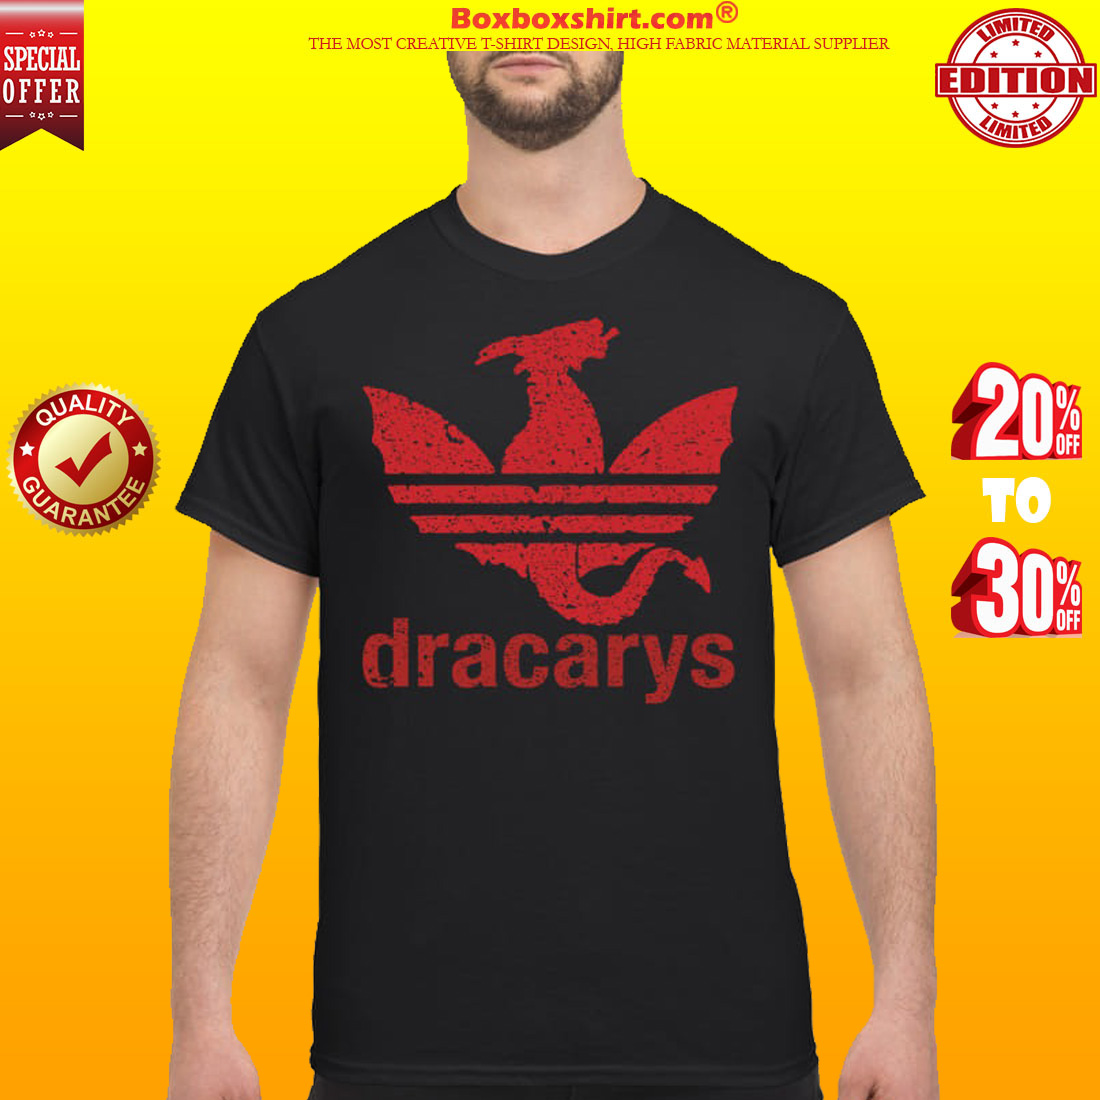 Dracarys adidas classic shirt